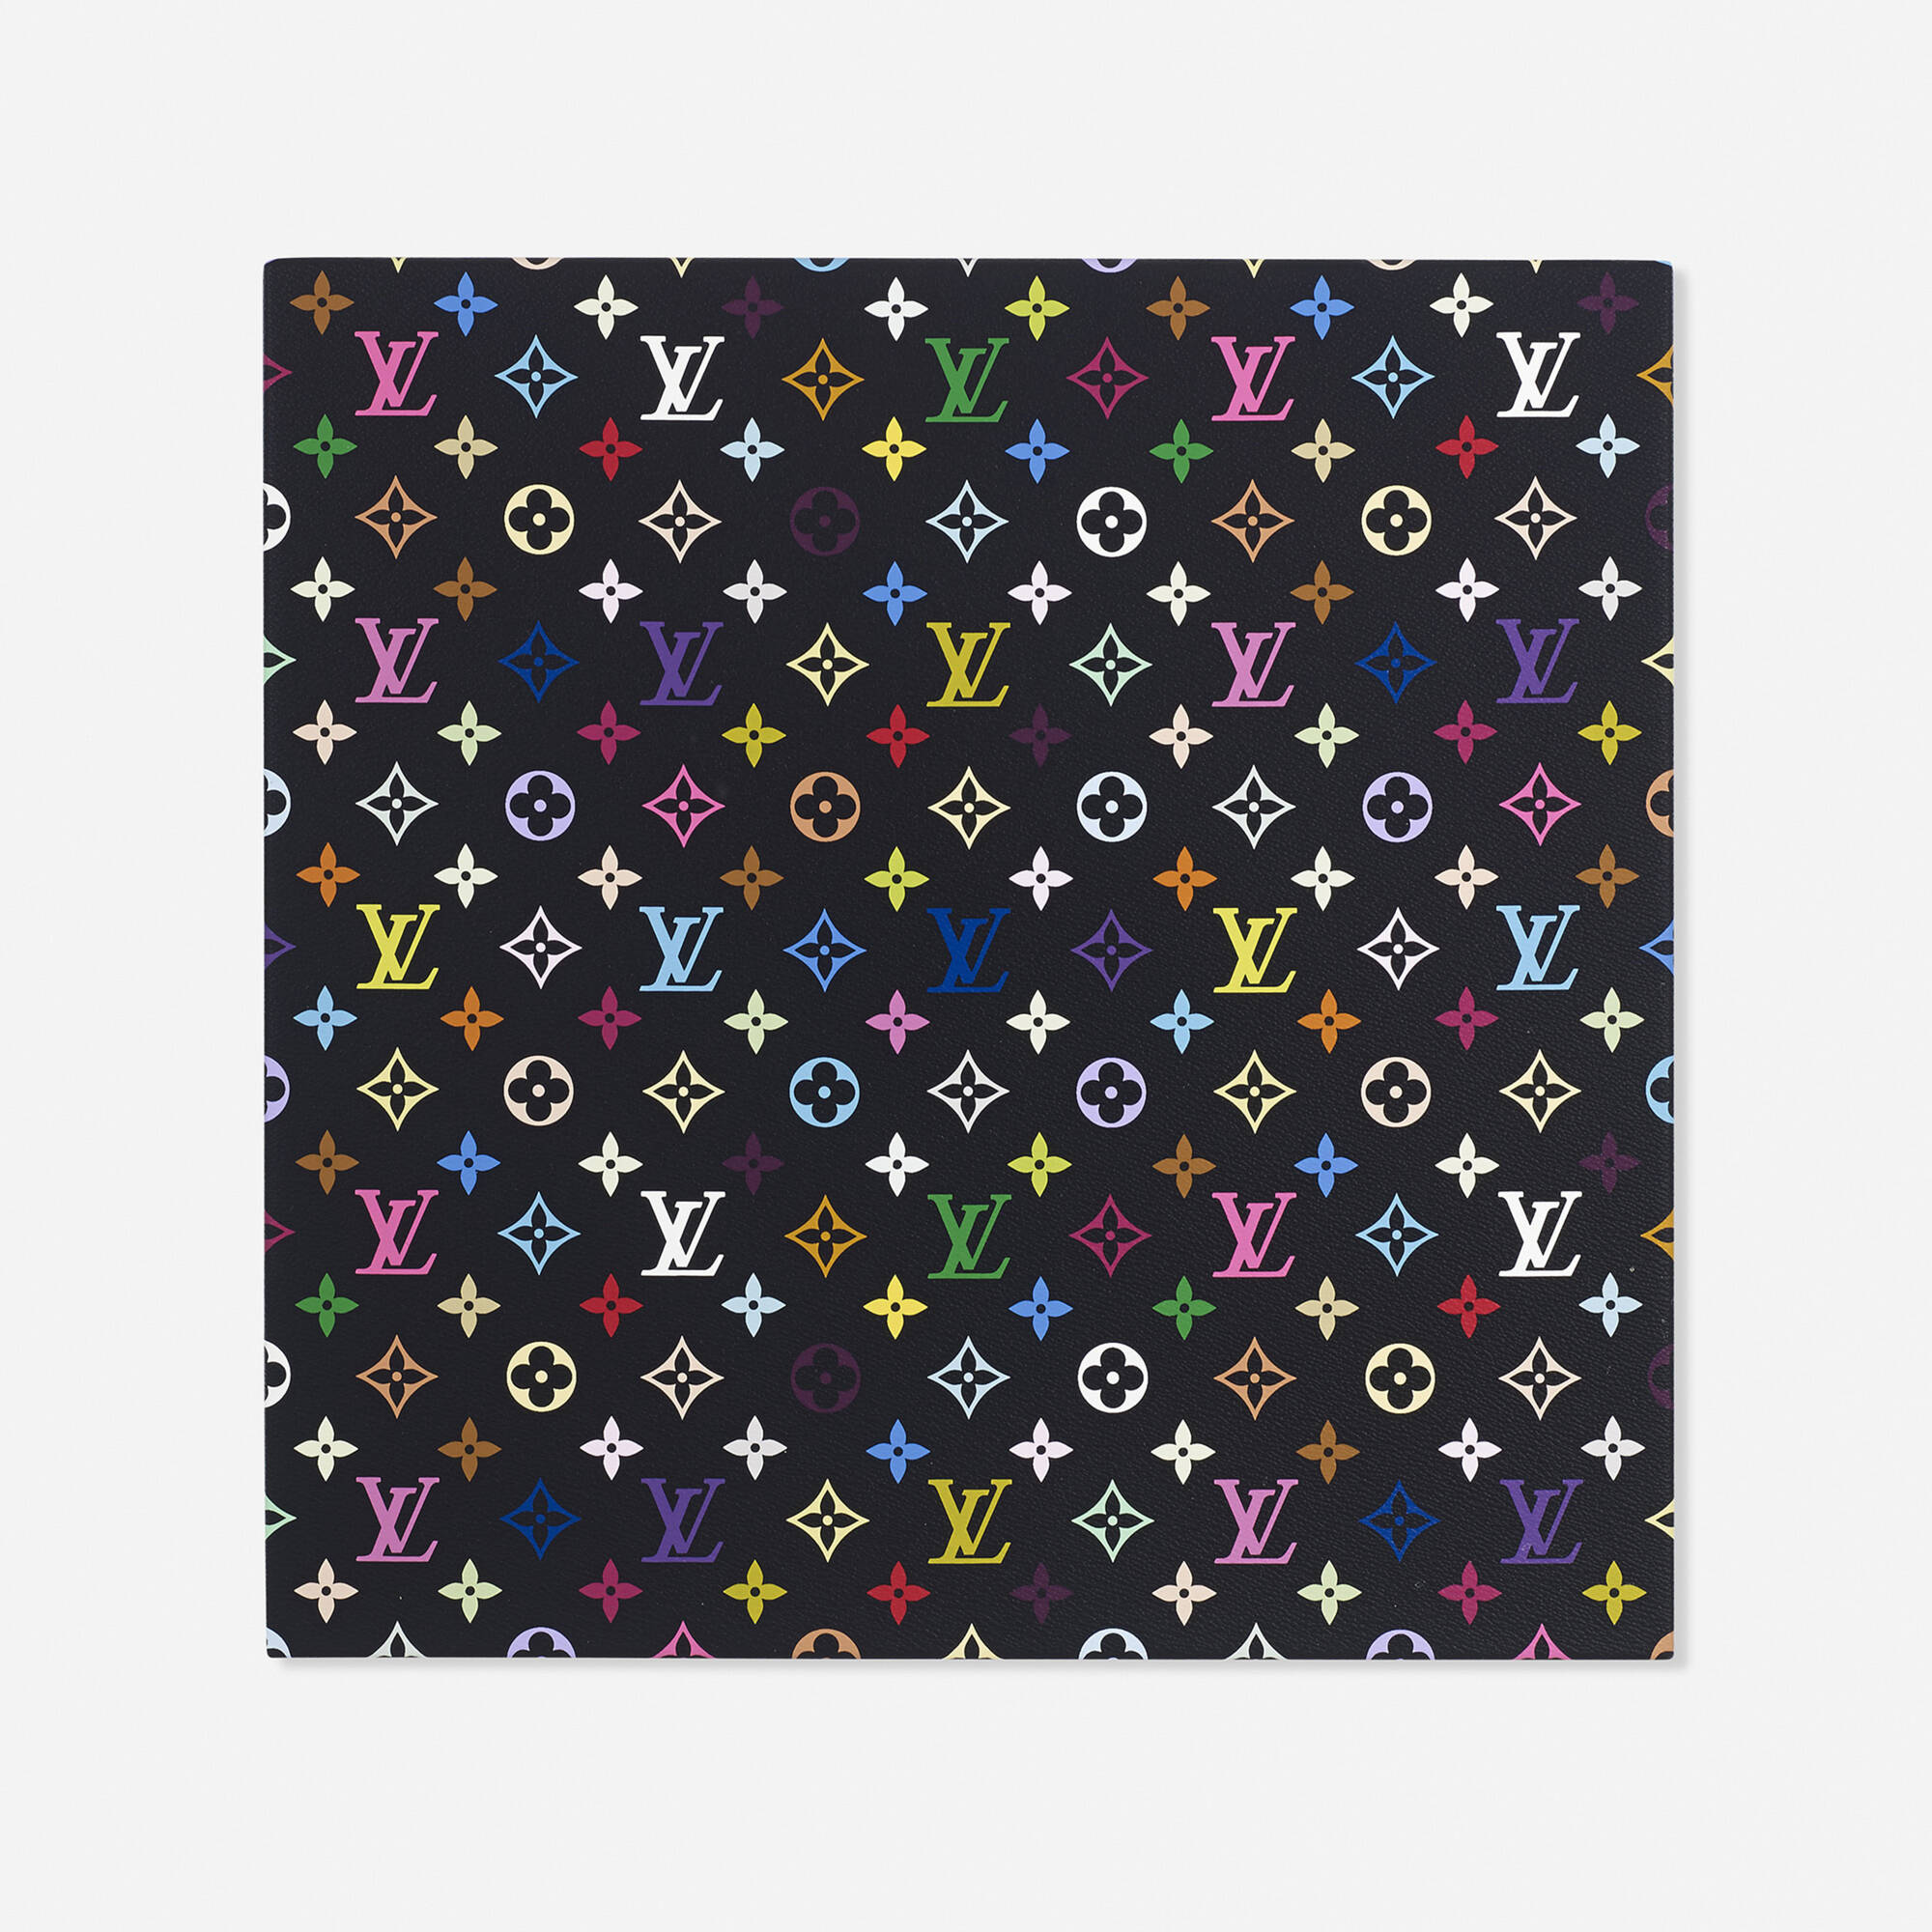 177: TAKASHI MURAKAMI AND LOUIS VUITTON, Monogram Multicolore